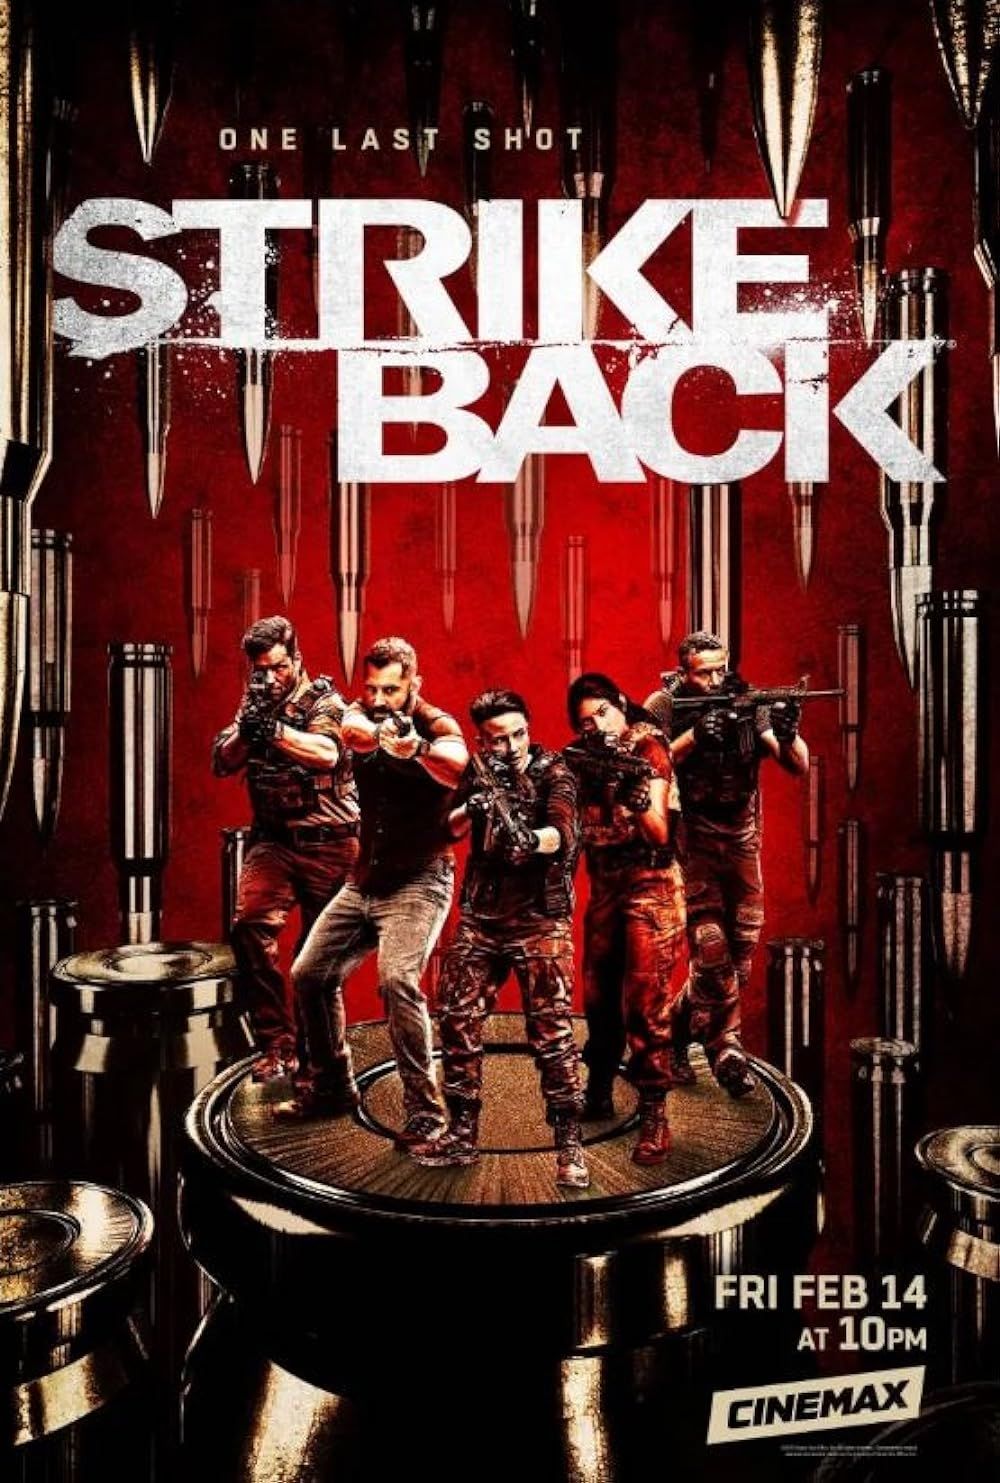 Jamie Bamber, Daniel MacPherson, Warren Brown, Alin Sumarwata, and Varada Sethu in the poster for Strike Back